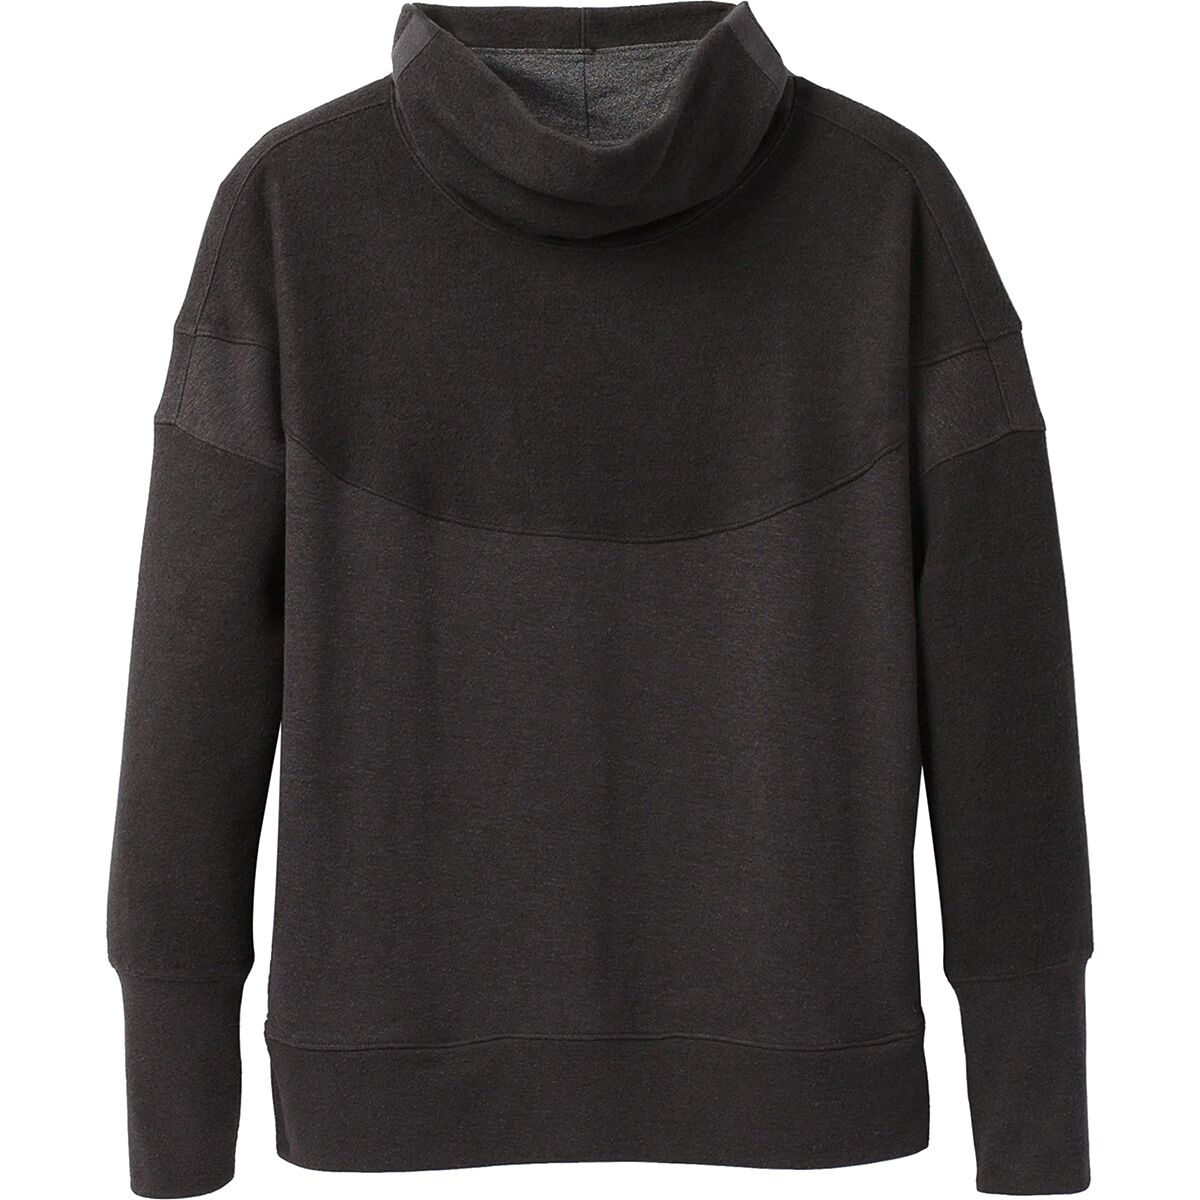 Prana Cozy Up Turtleneck Sweatshirt - Women's | Backcountry.com